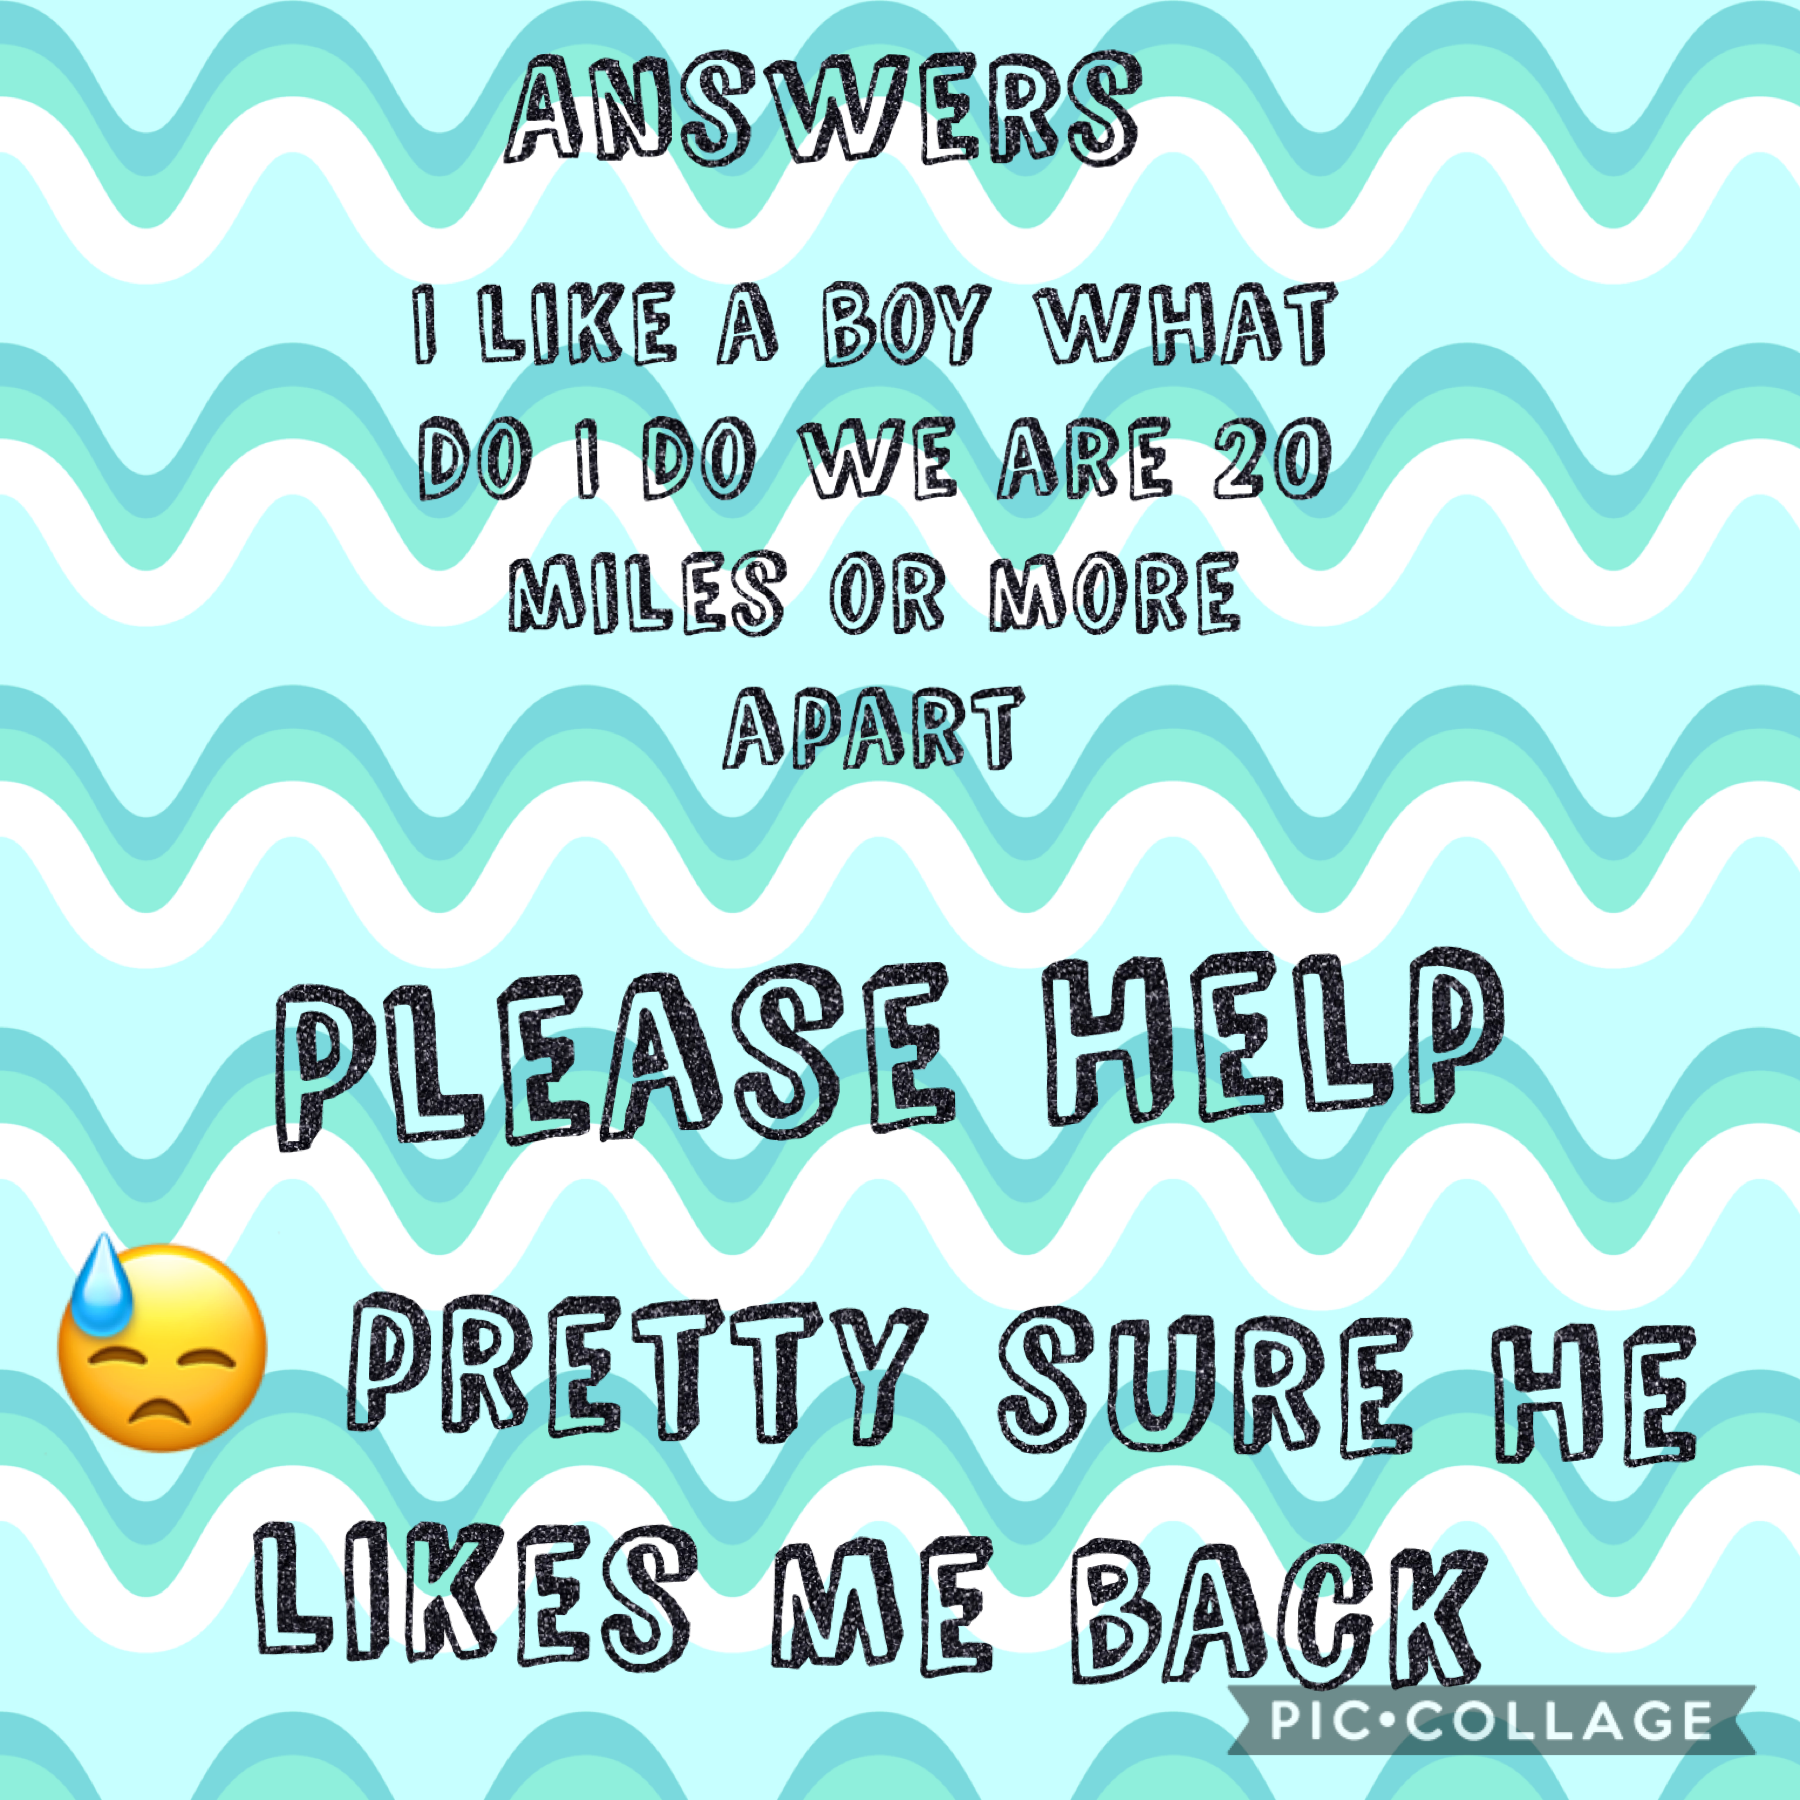 Help please